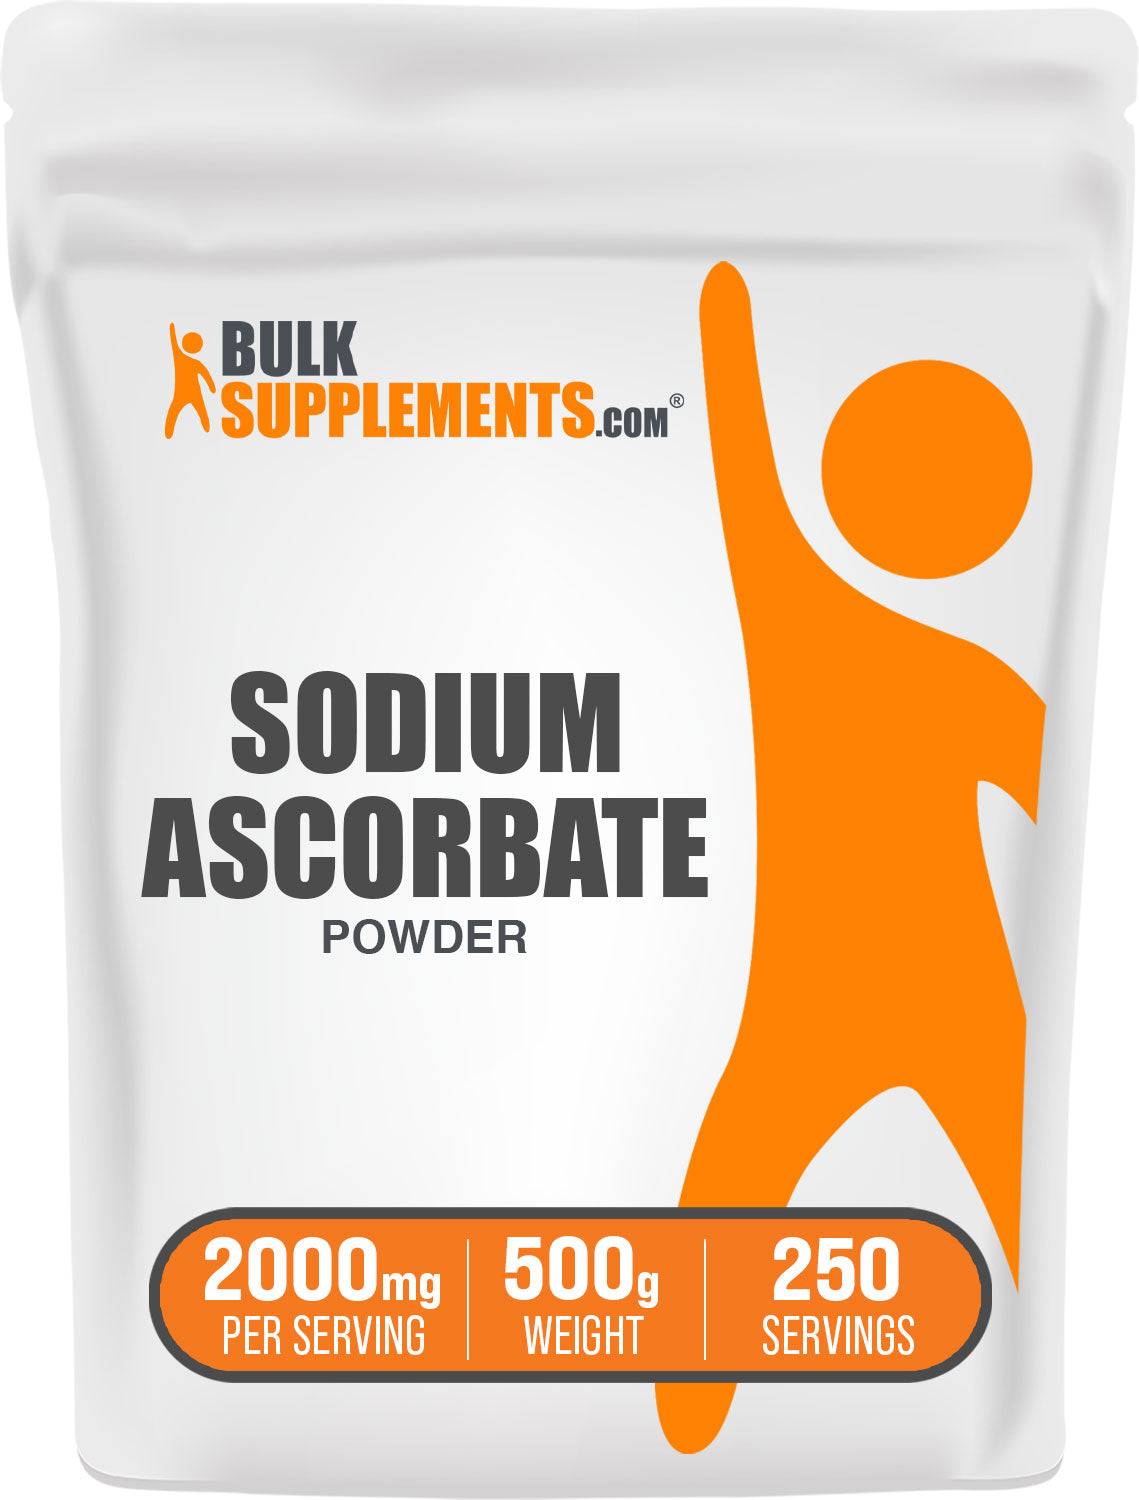 BulkSupplements.com Sodium Ascorbate Powder 500g bag